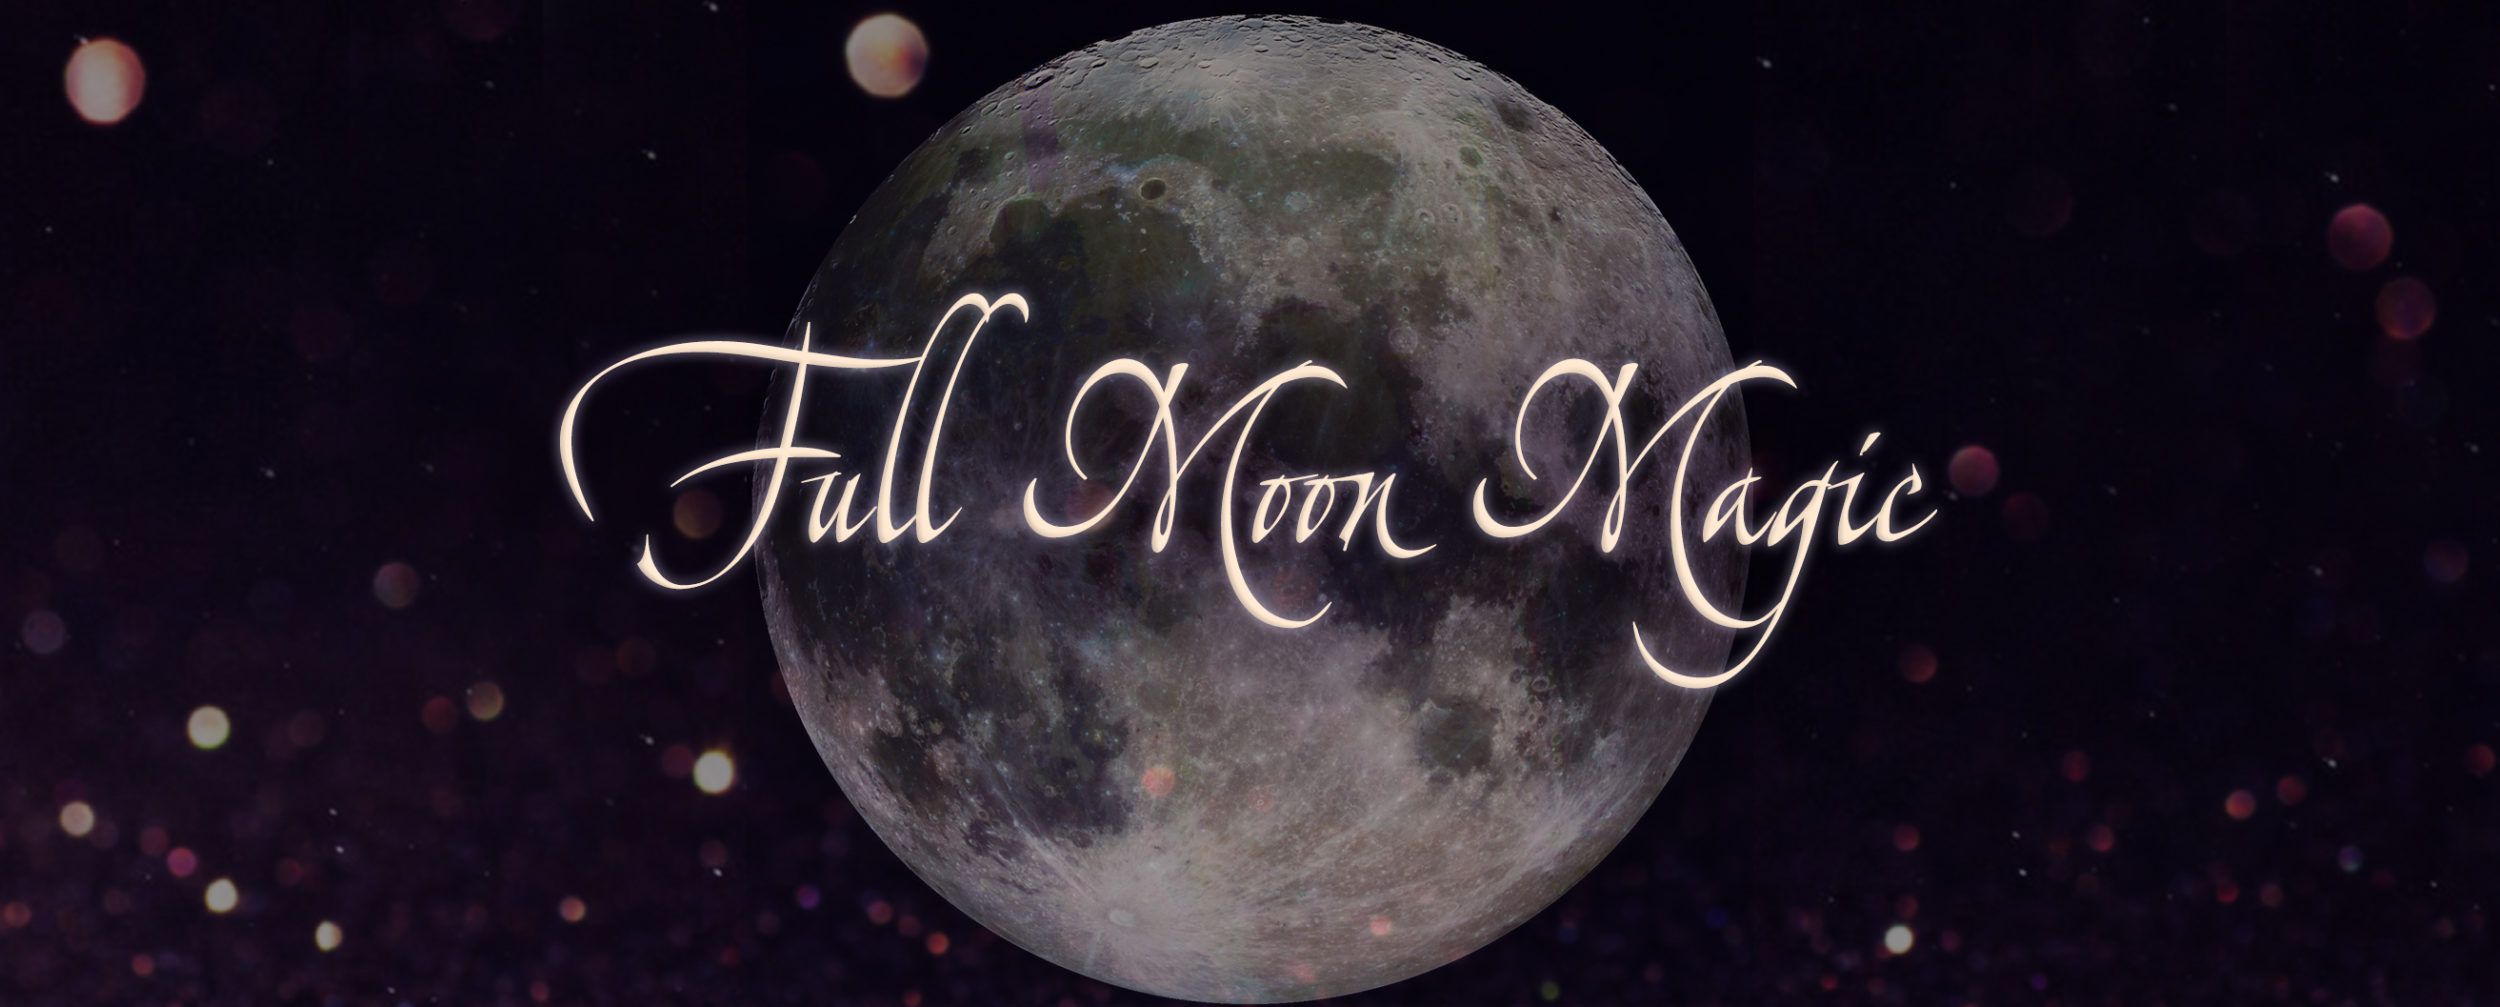 What is Full Moon Magic?